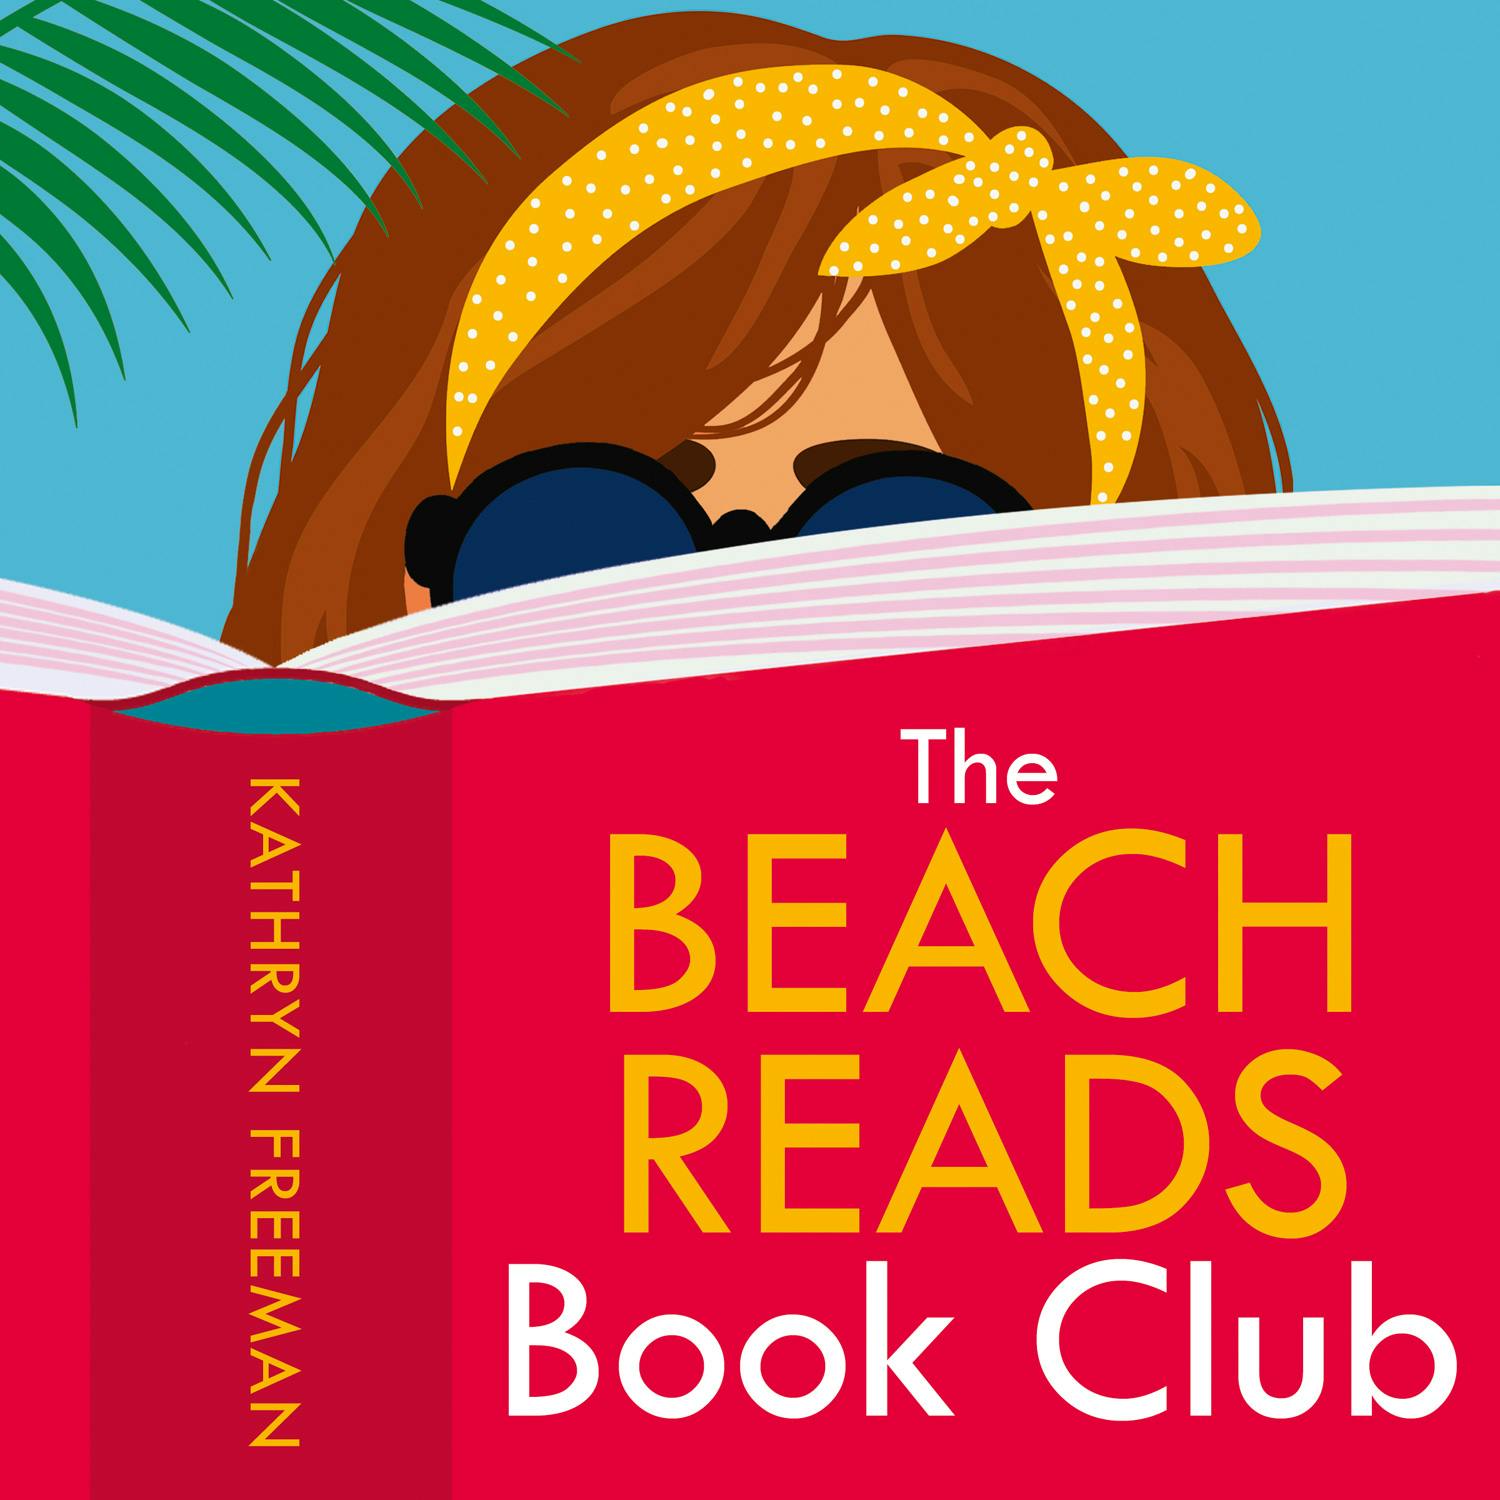 The Beach Reads Book Club - Kathryn Freeman